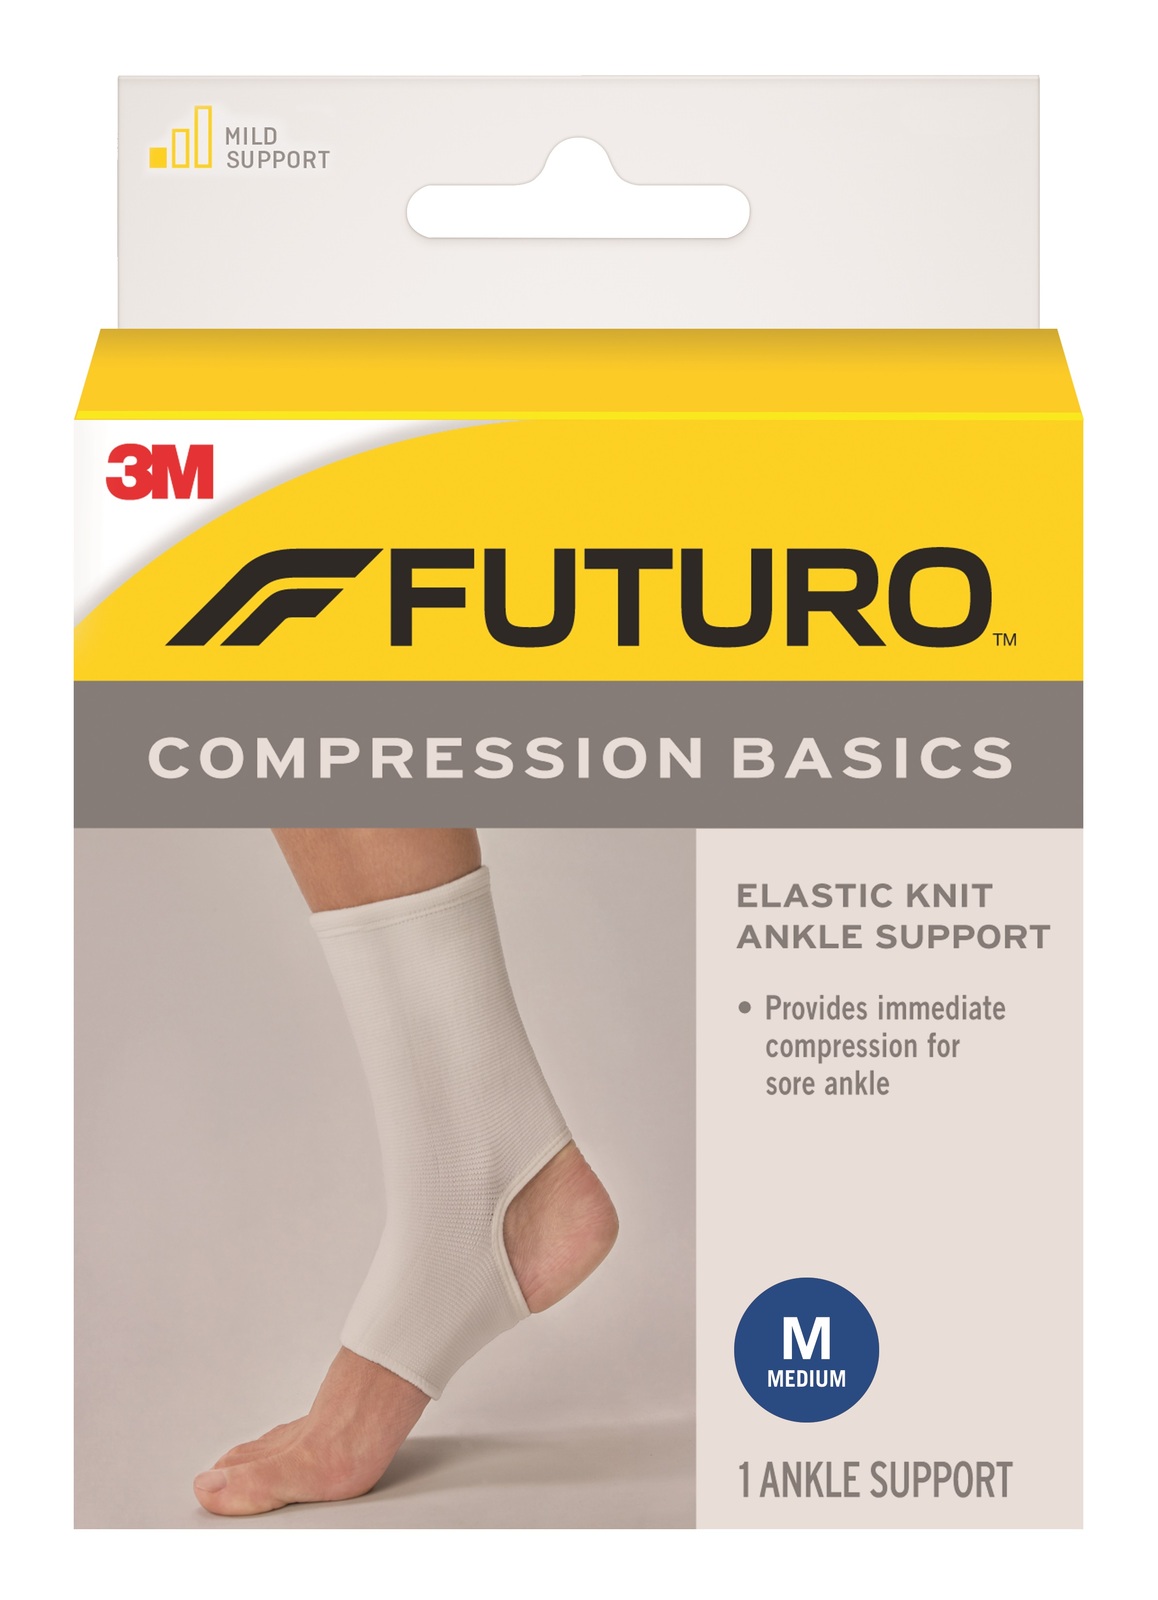 Futuro Compression Basics Elastic Knit Ankle Support